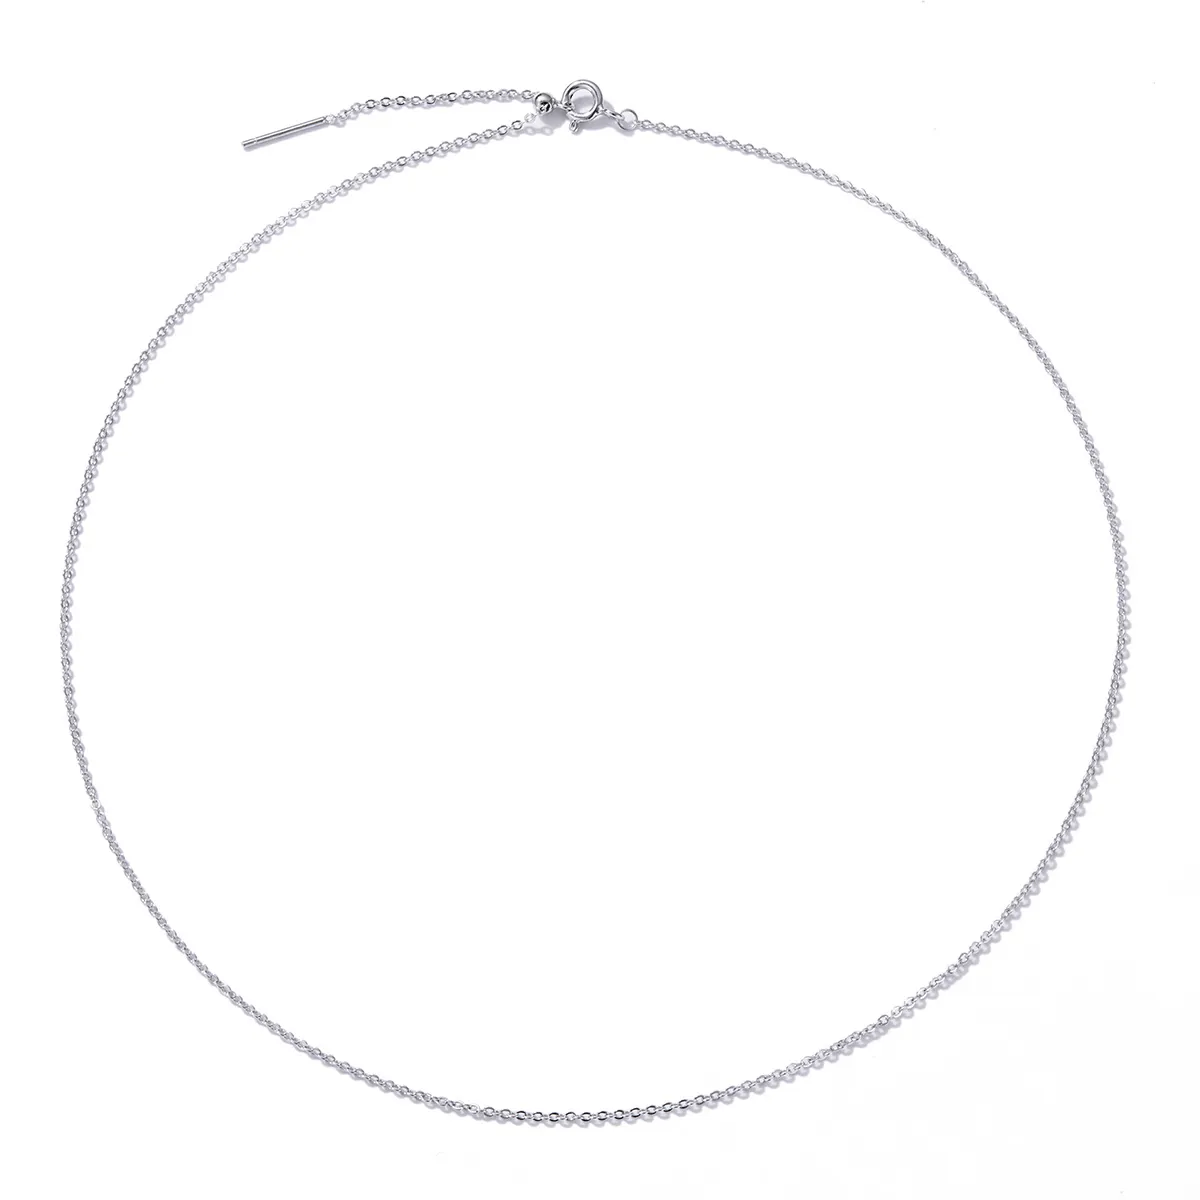 Pandora Style Simple Bead Chain Necklace - BSN224